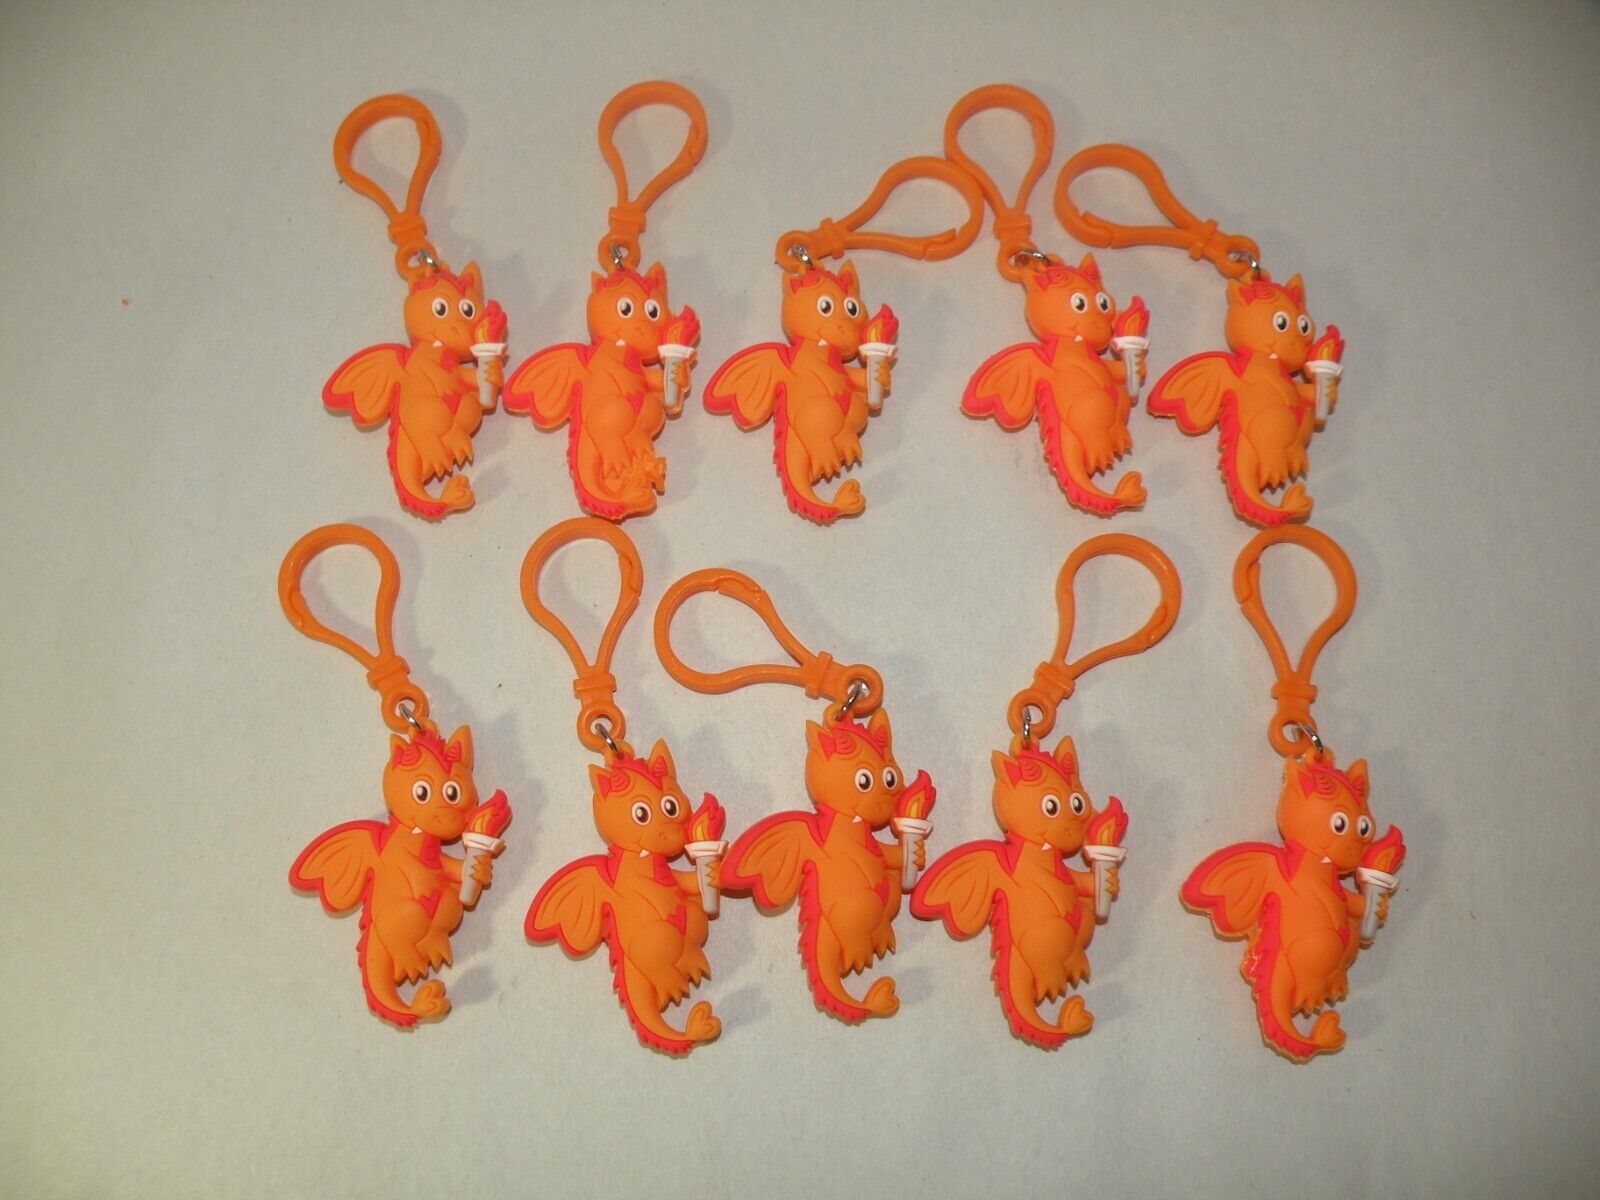 10x Kids Challenge Keychain Hearty Orange Dragon American Heart Association D